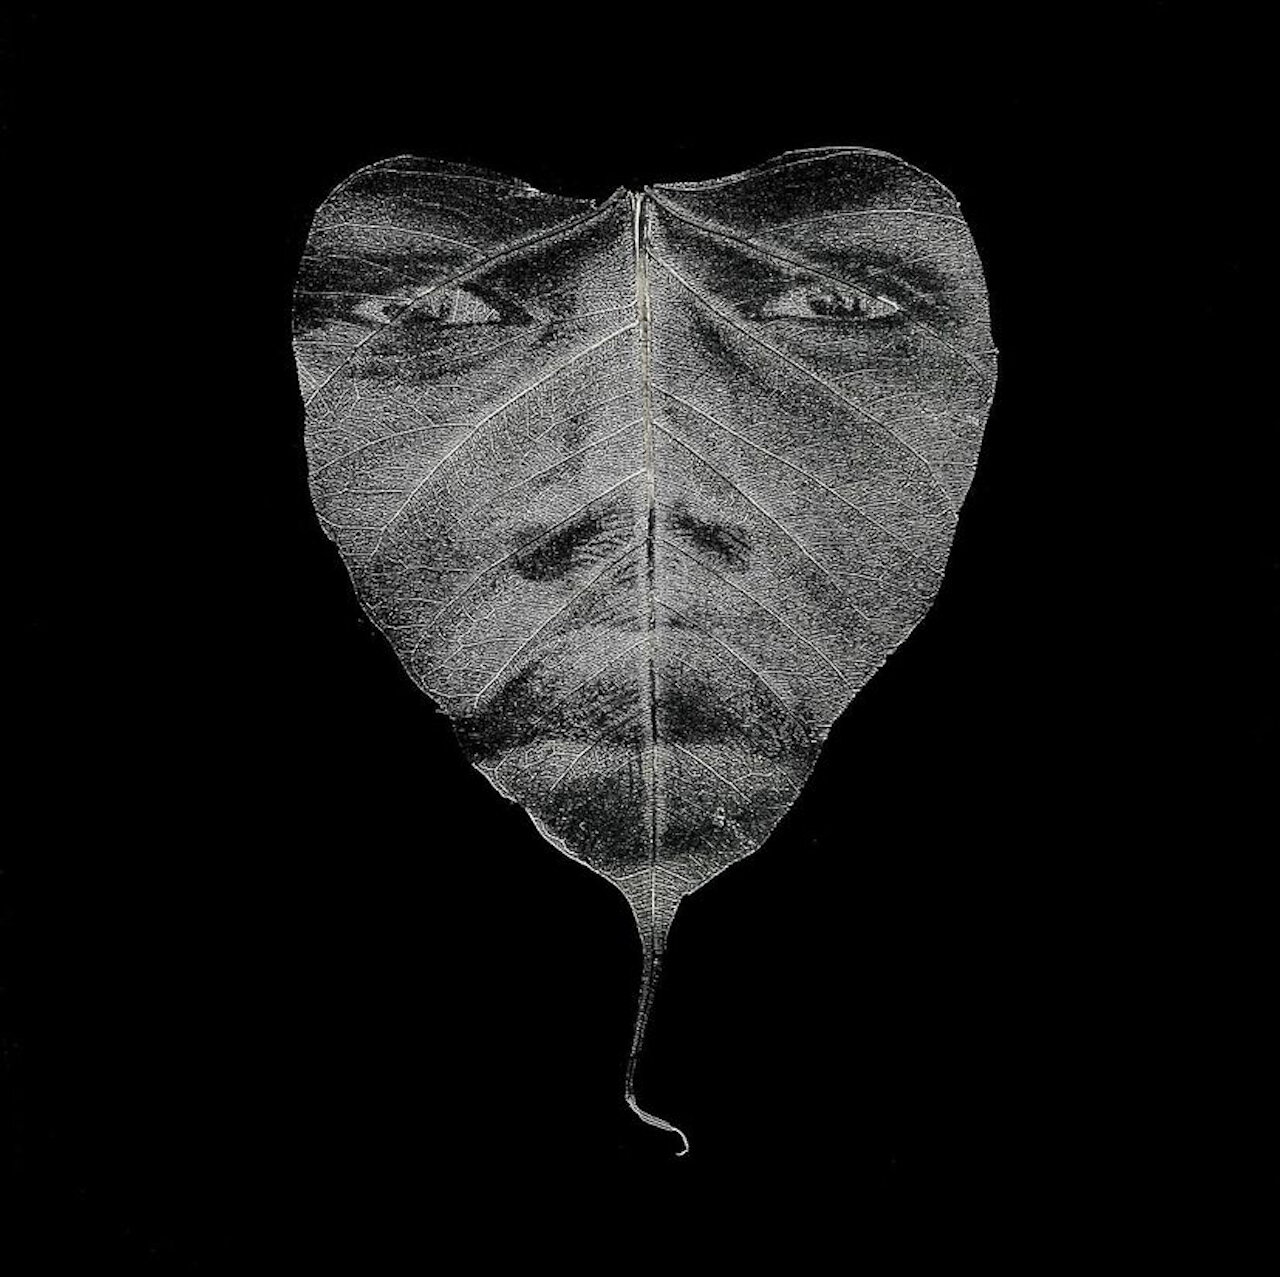  BEST ALTERNATIVE PROCESS PHOTOGRAPH  SAMANTHA BIAS,  The Awakening,  2020. 8x11.5”. Photographic transfer on skeleton leaf. SOLD. 